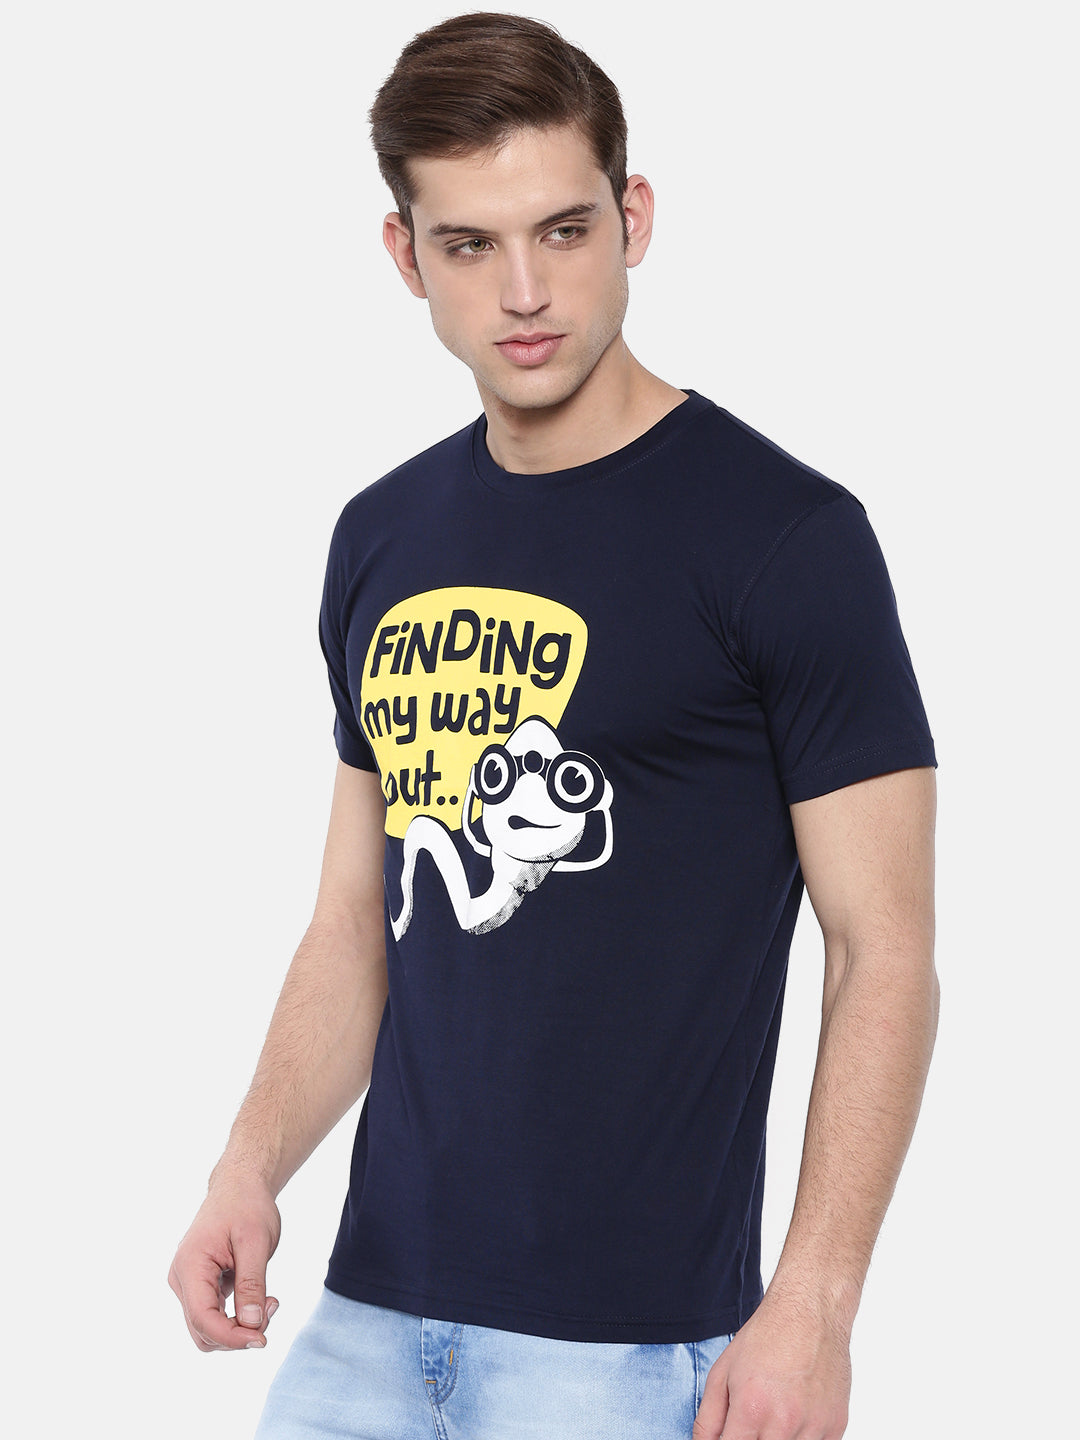 Finding My Way Out T-Shirt Graphic T-Shirts Bushirt   